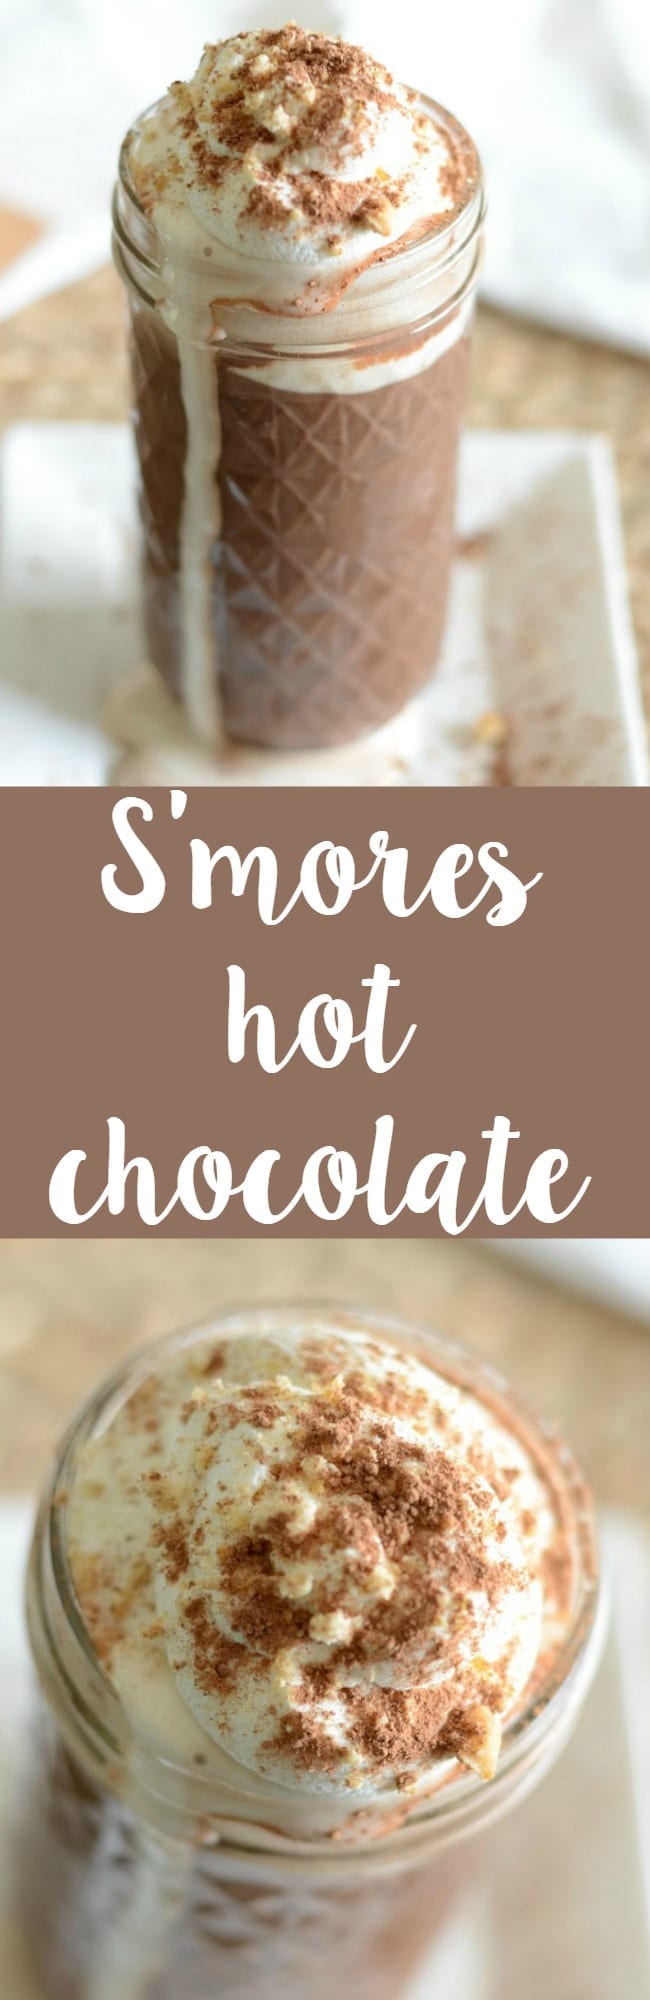 S'mores hot chocolate recipe